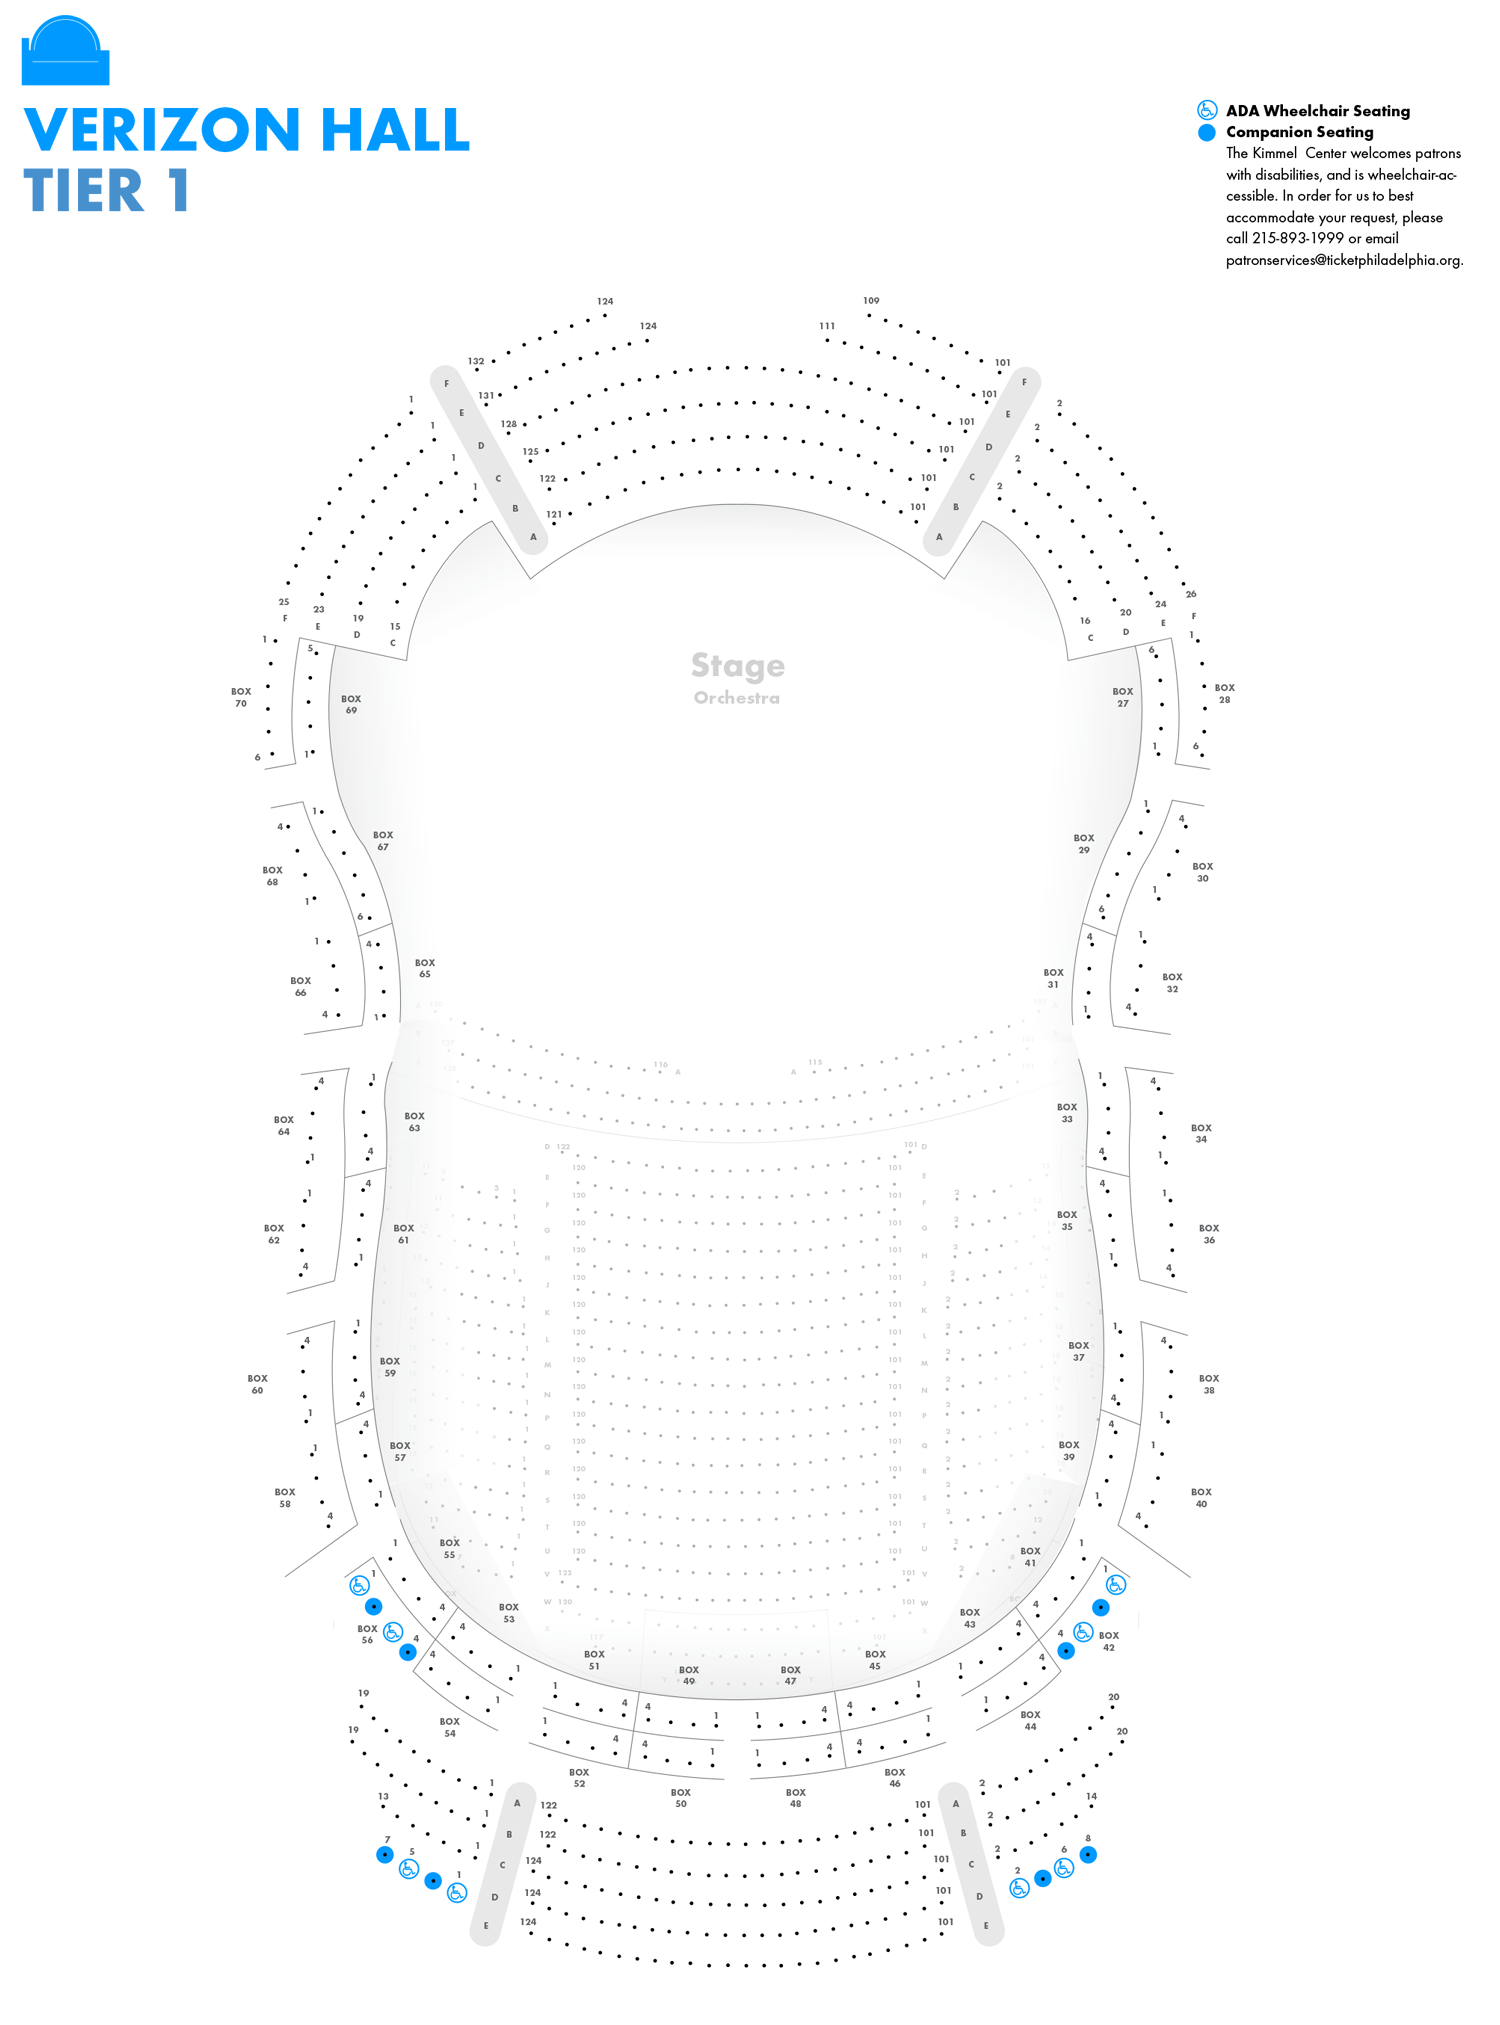 Verizon Hall Seating Charts - Kimmel Center